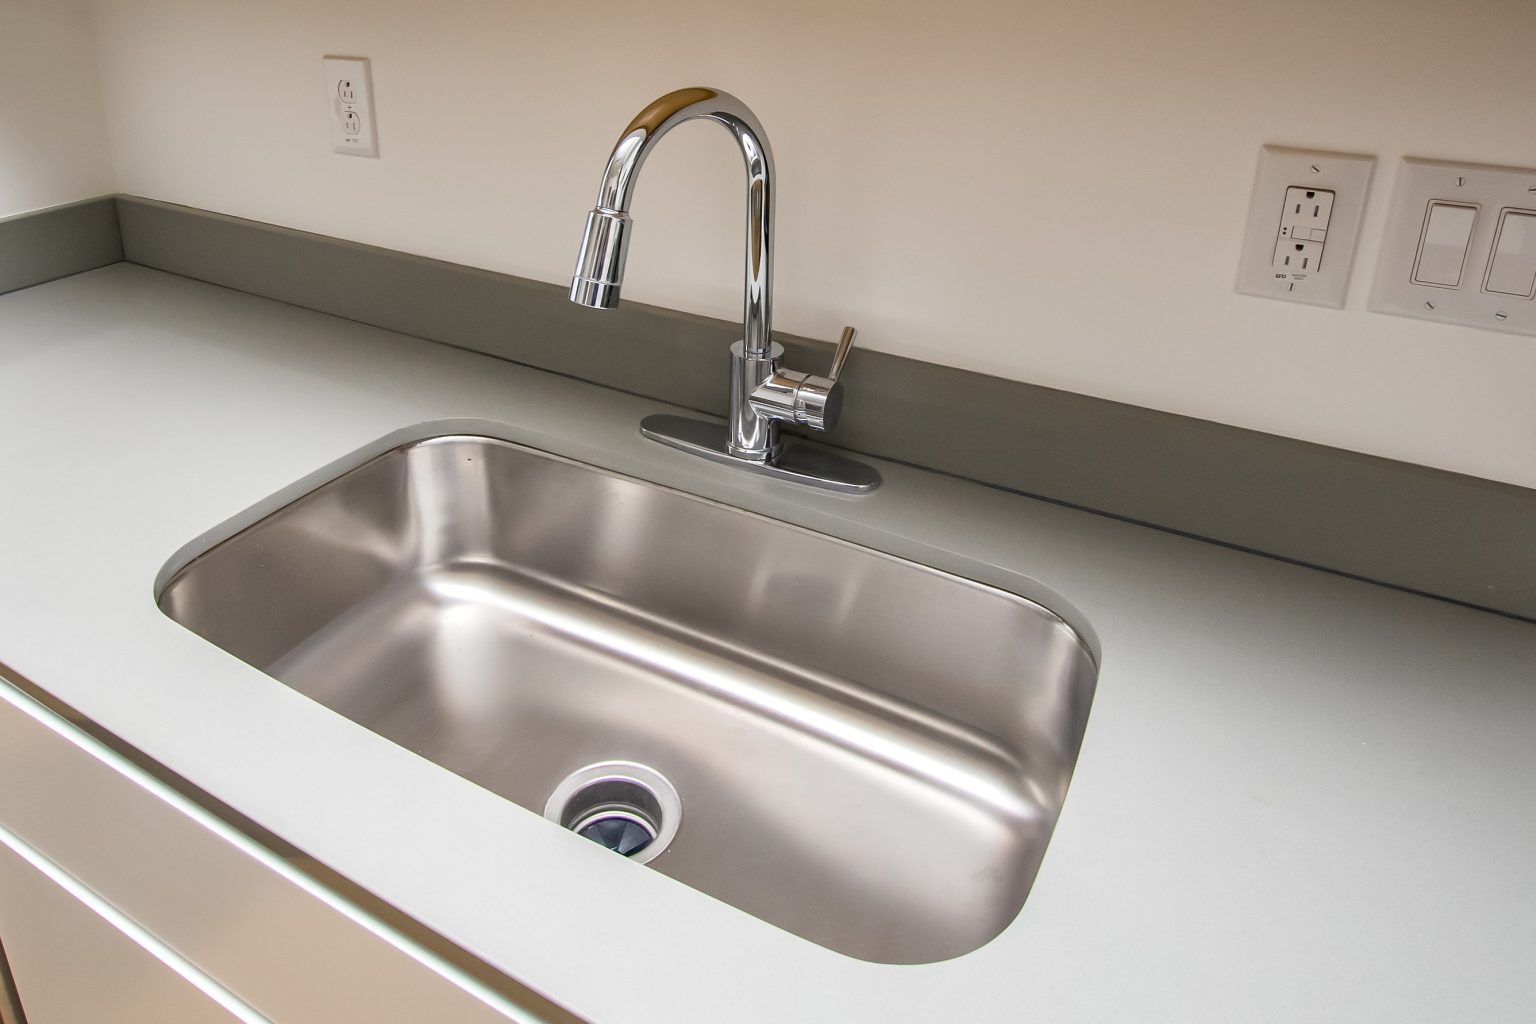 Kitchen-Sink-Ideas-for-Maximising-Utility-5-1536x1024.jpg